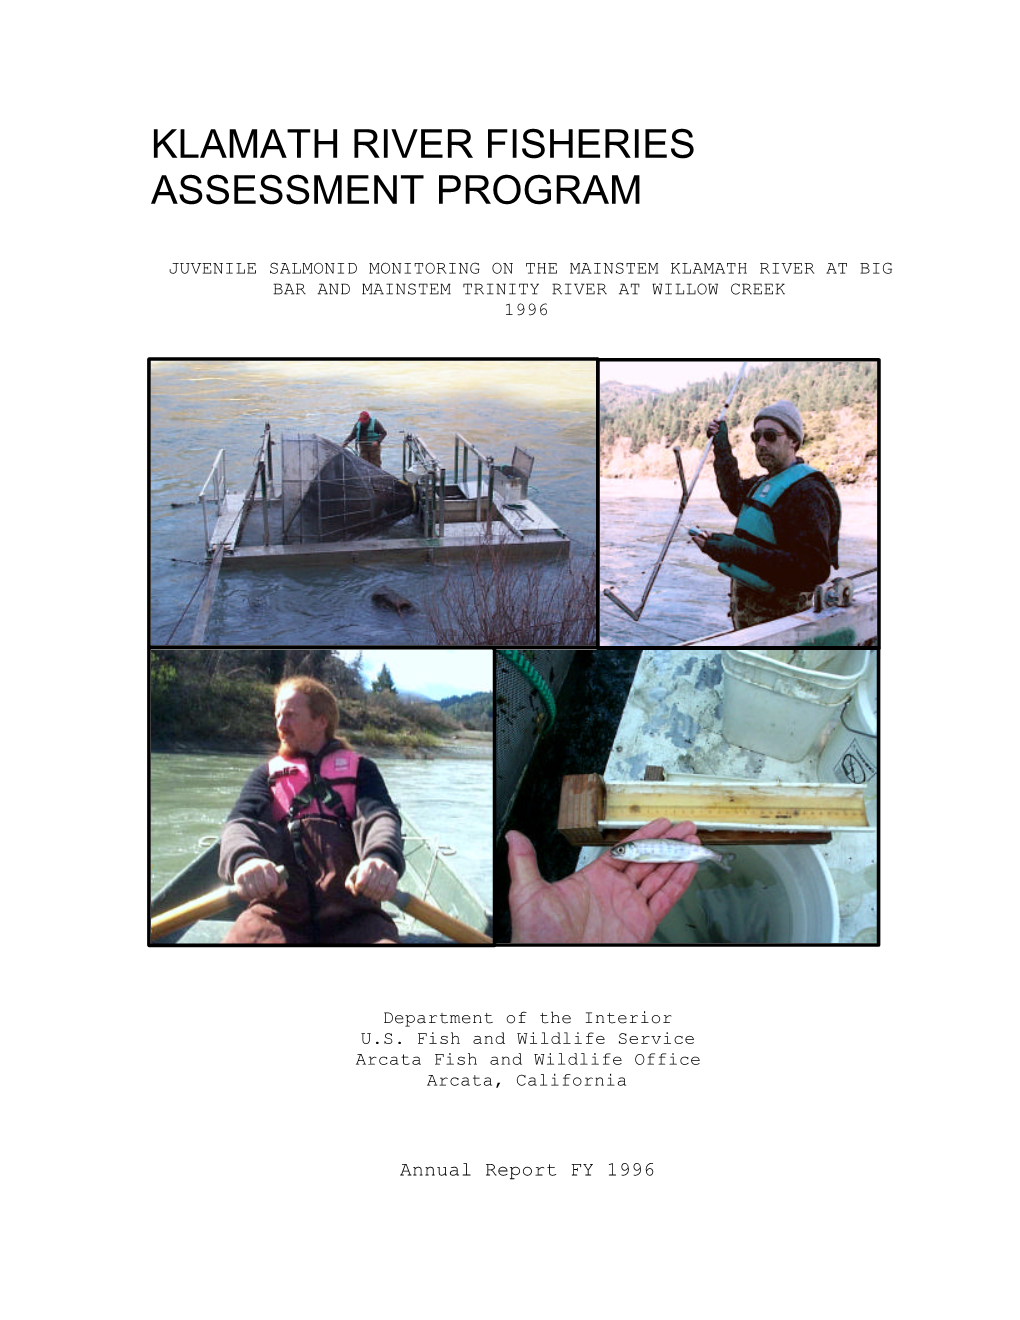 Klamath River Fisheries Assessment Program